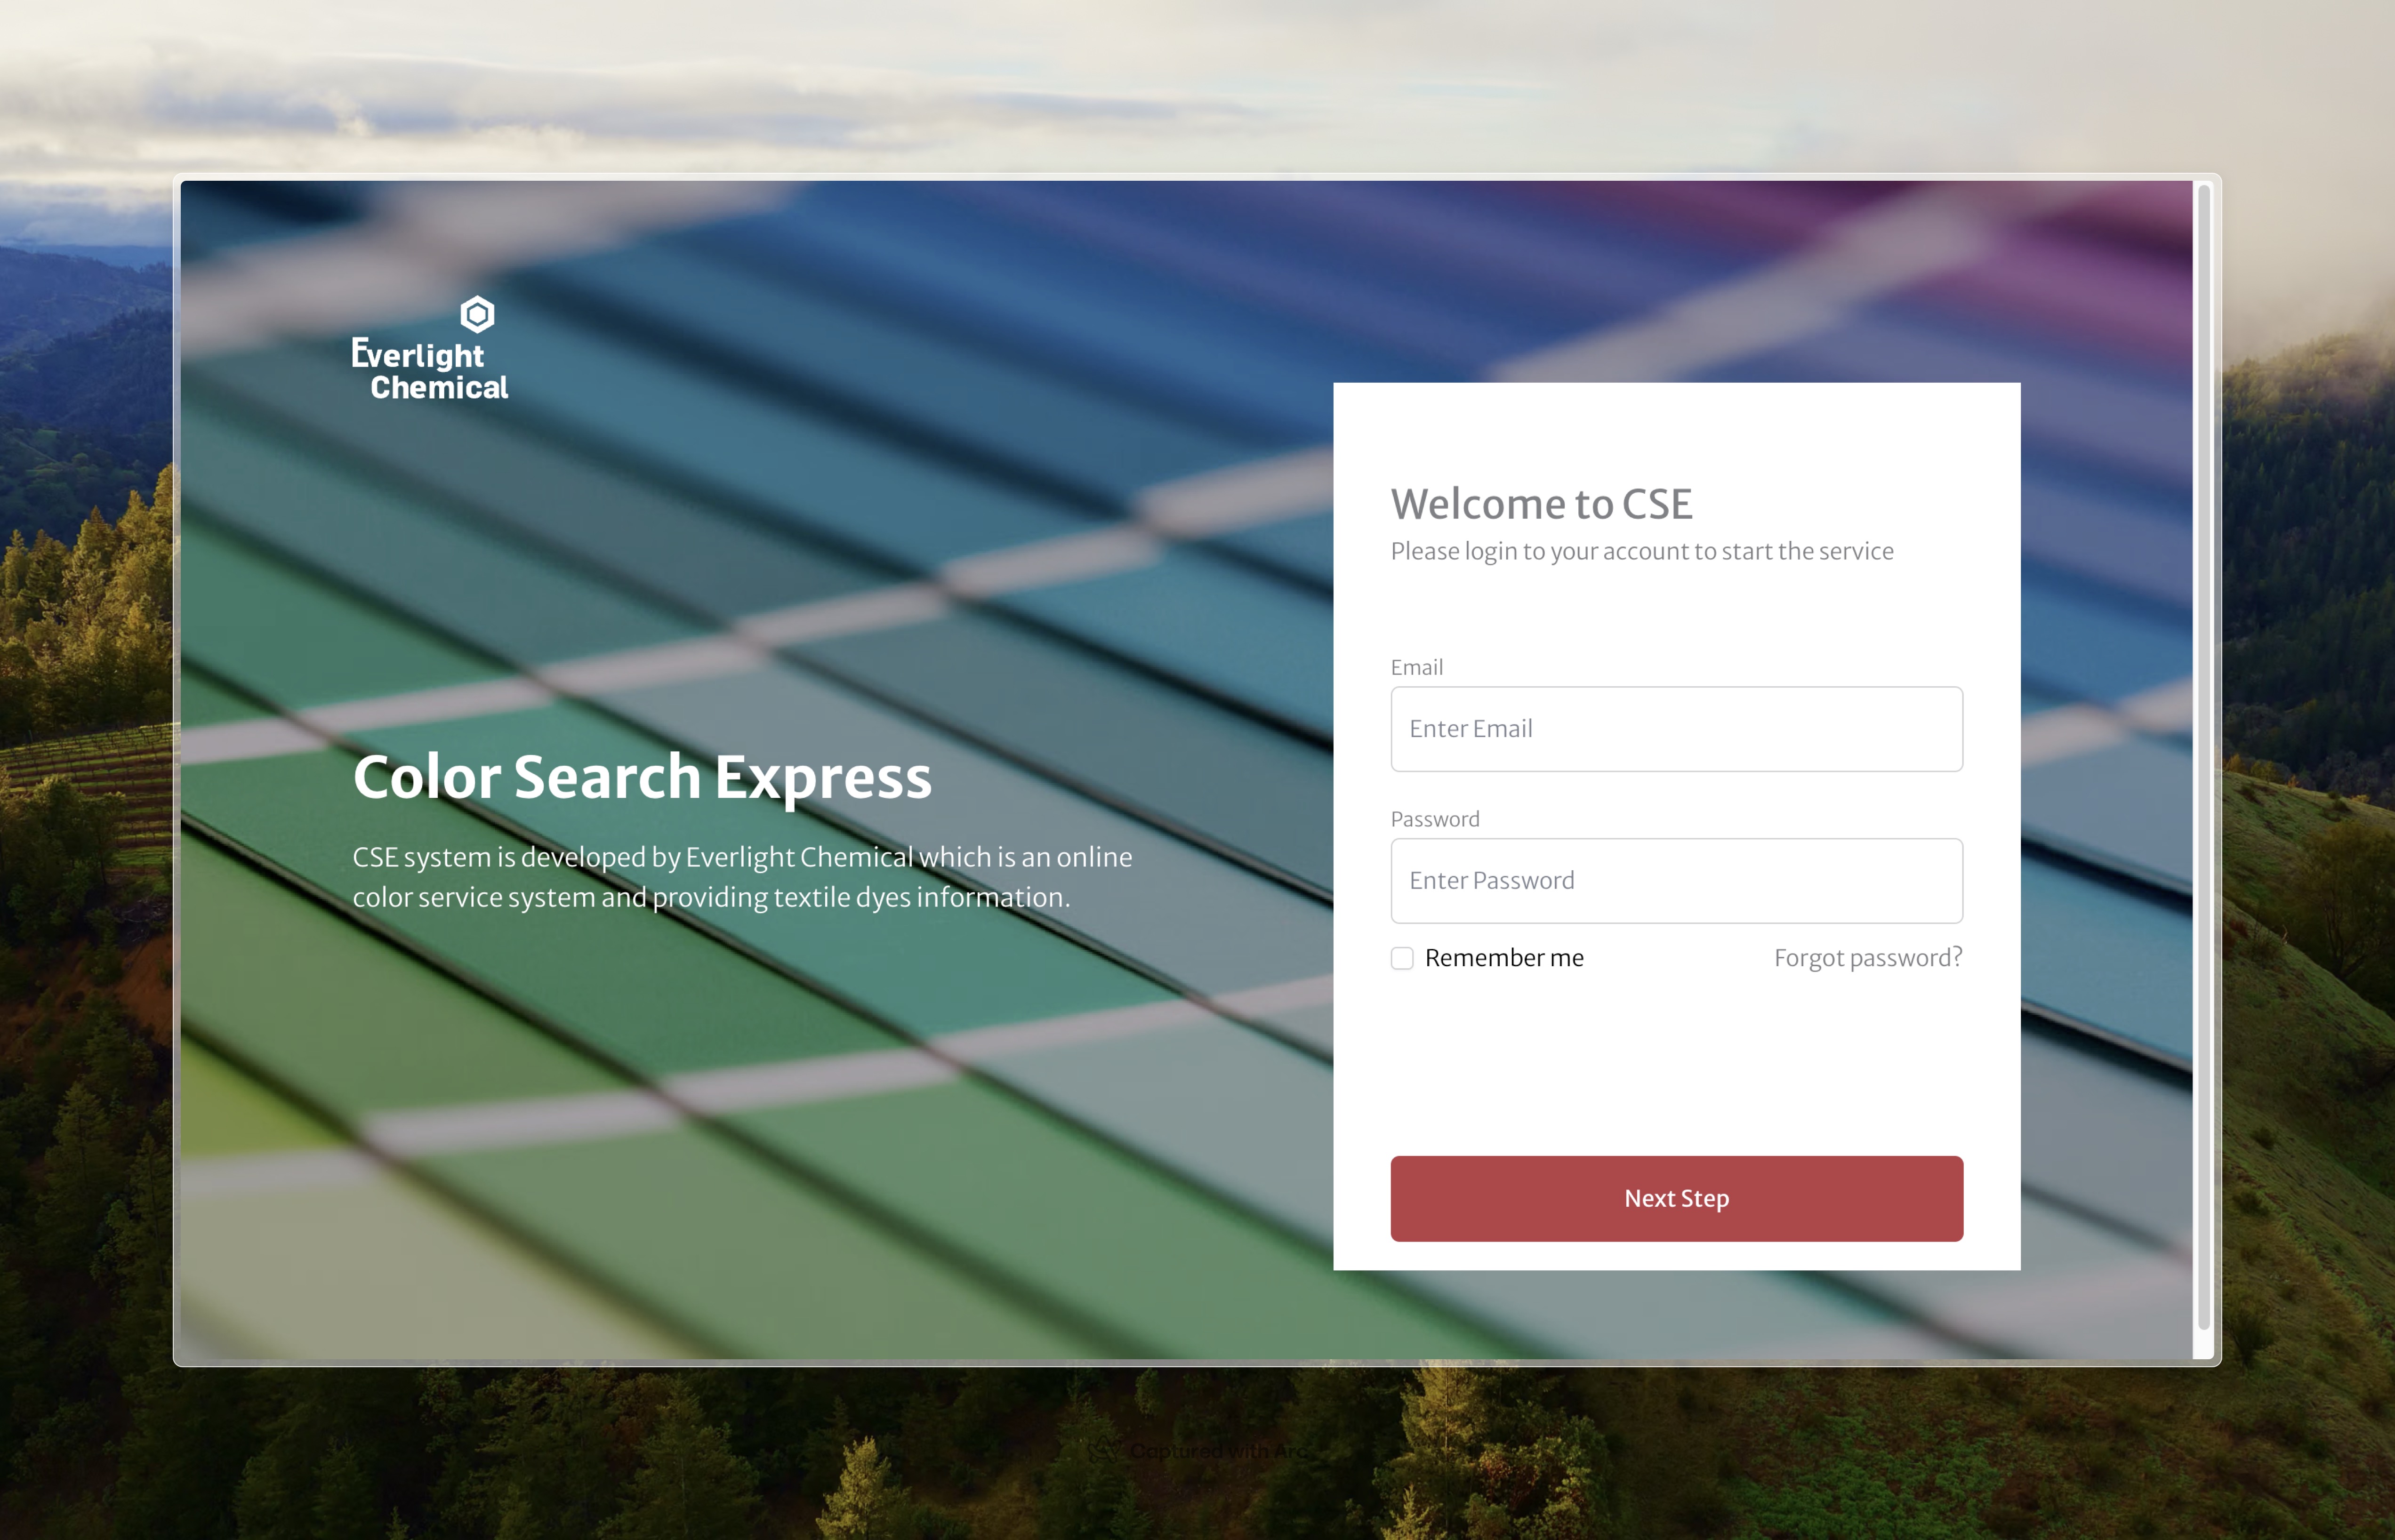 CSE (Color Search Express)